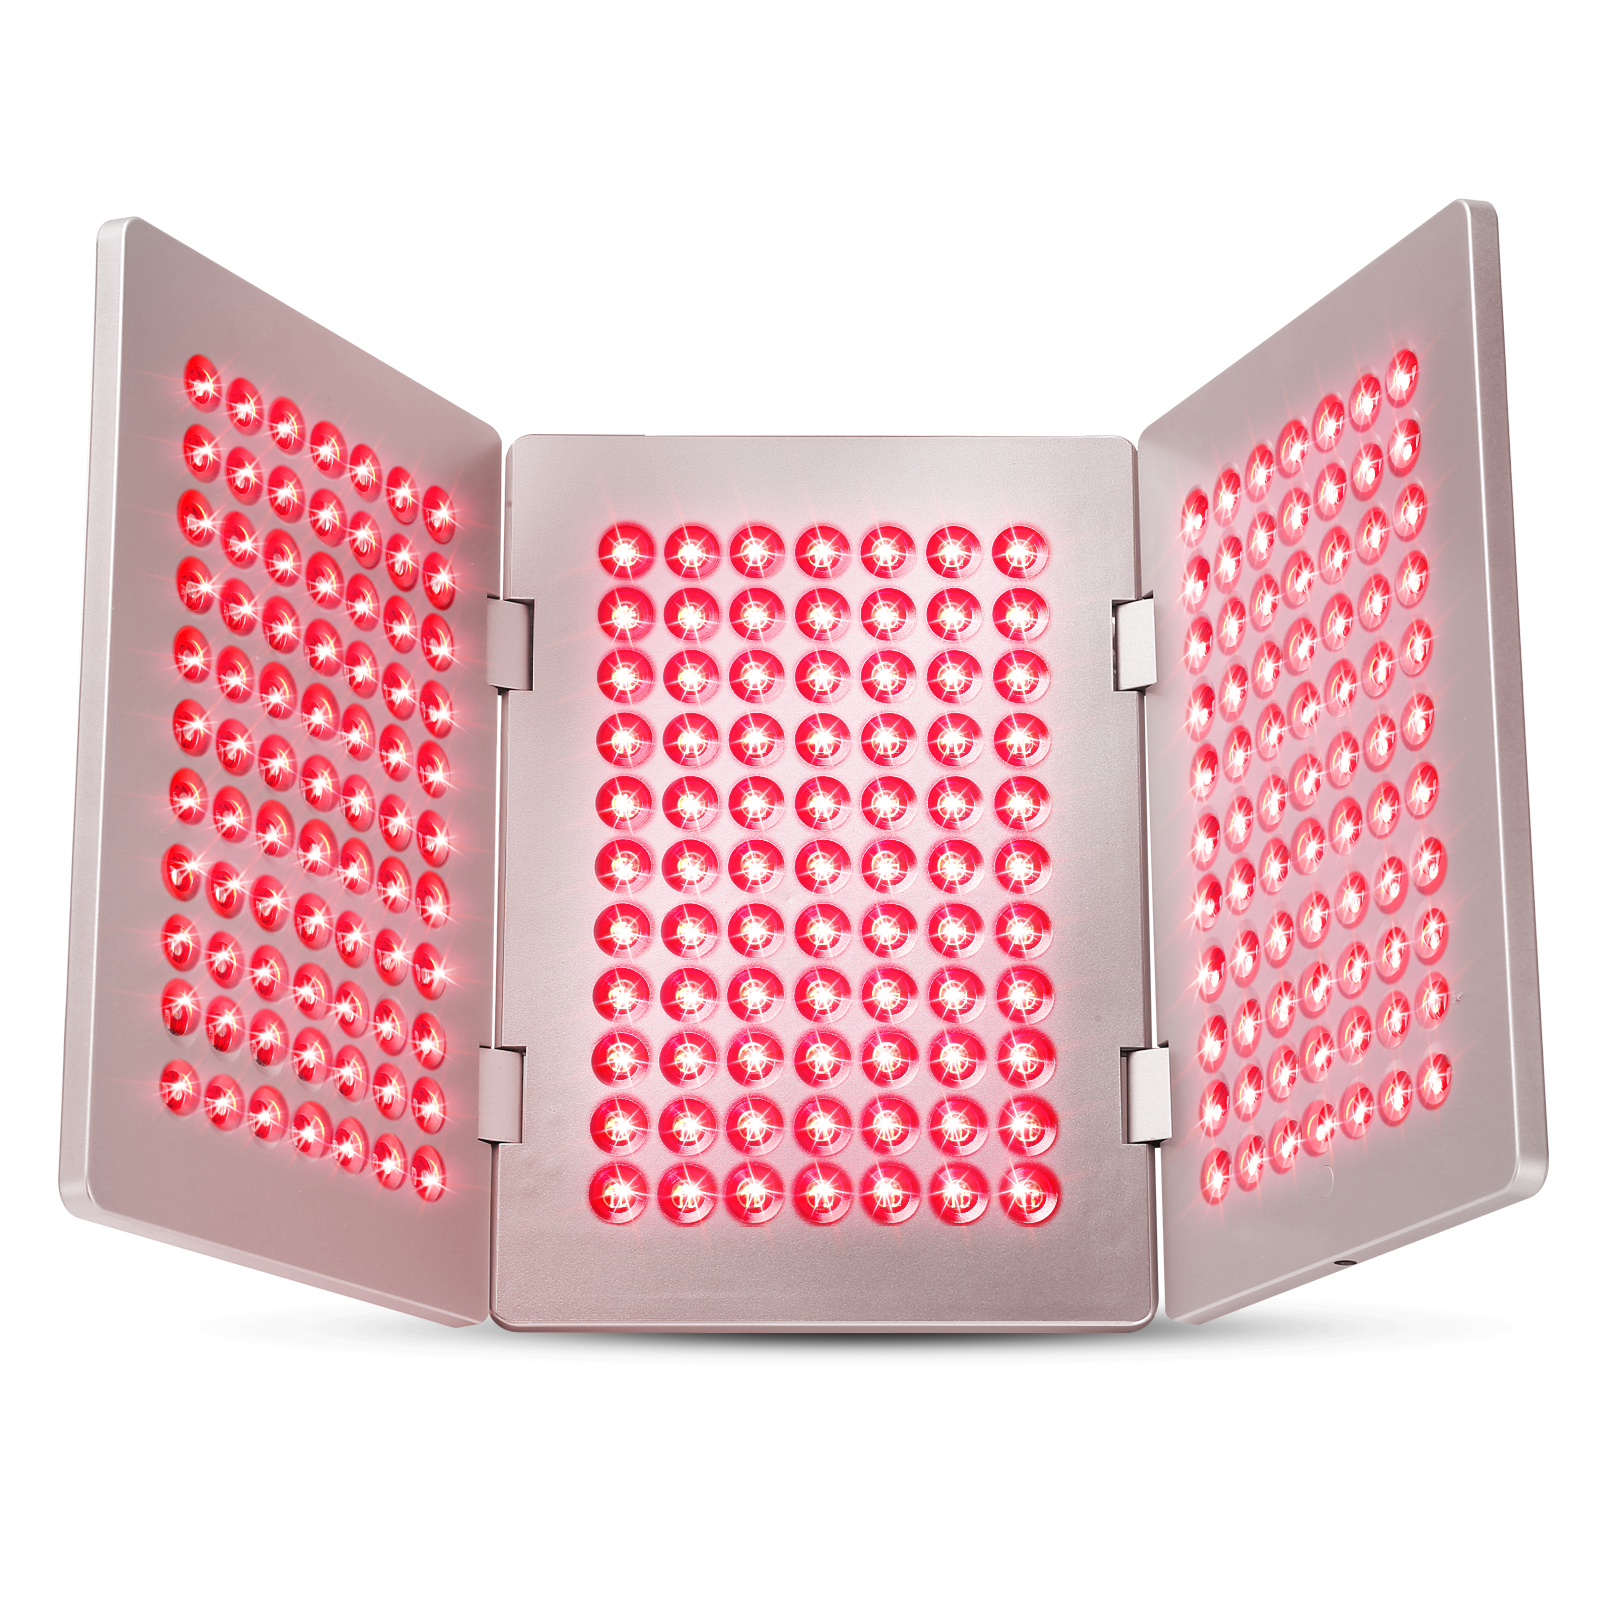 Bedste kvalitet rødt lys terapi panel 3 pad - B5 tre fold panel - fabrik